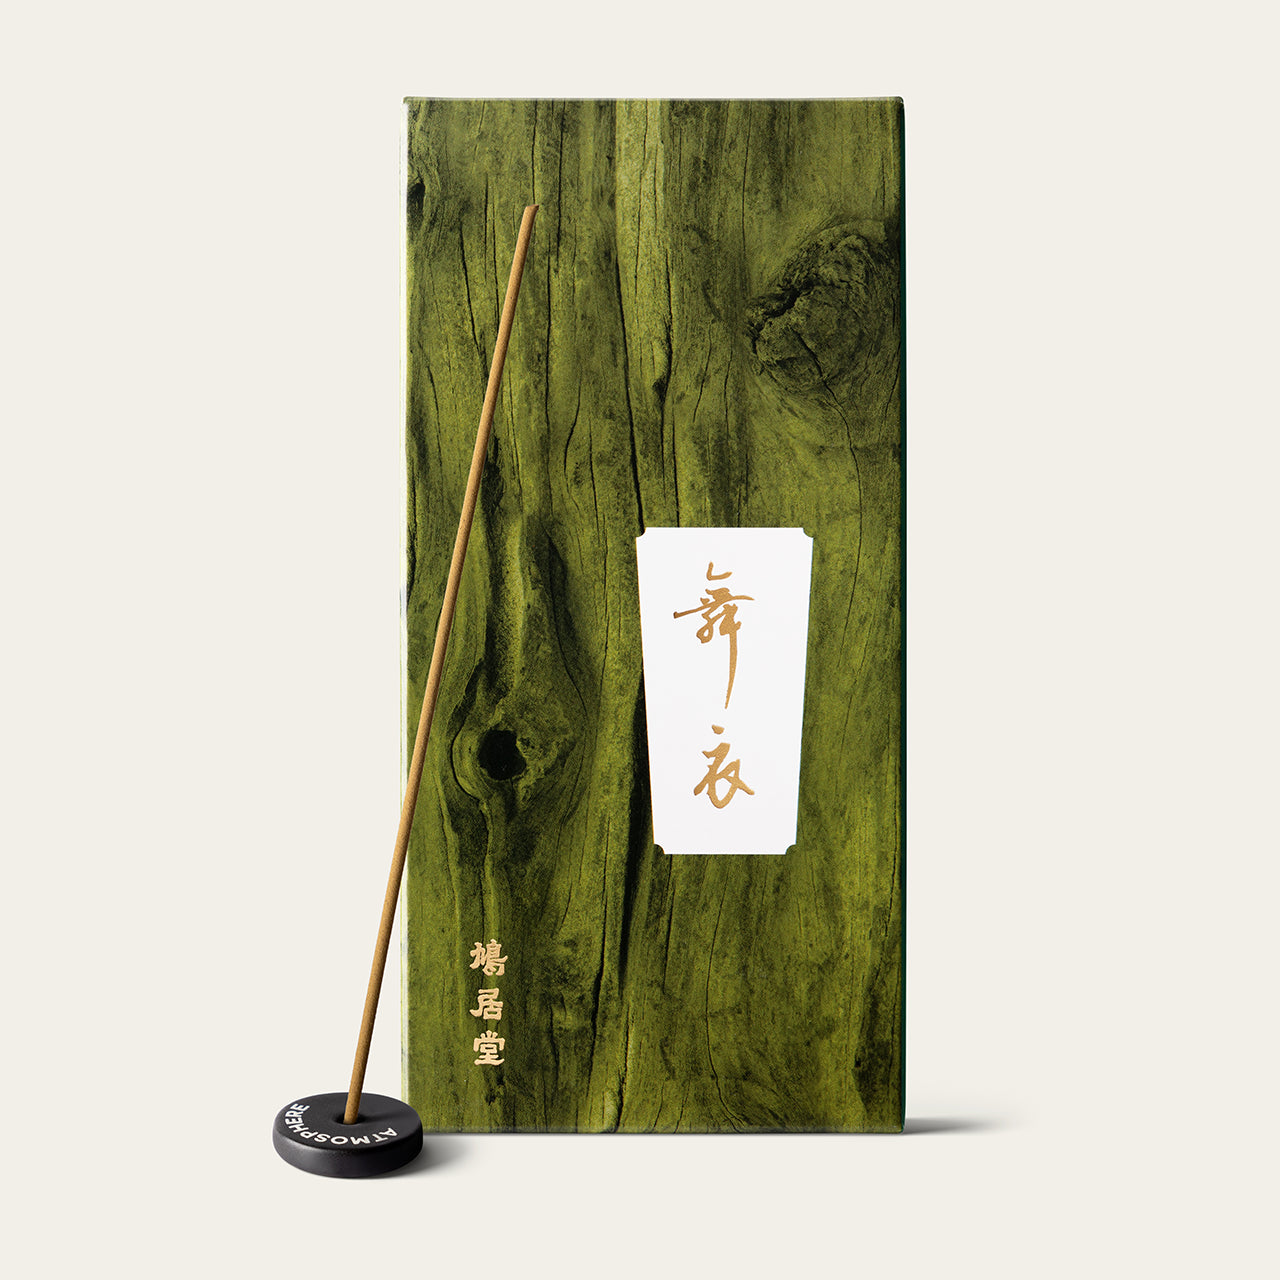 Kyukyodo Premium Dancing Robe Maigoromo Japanese incense sticks (200 sticks) with Atmosphere ceramic incense holder